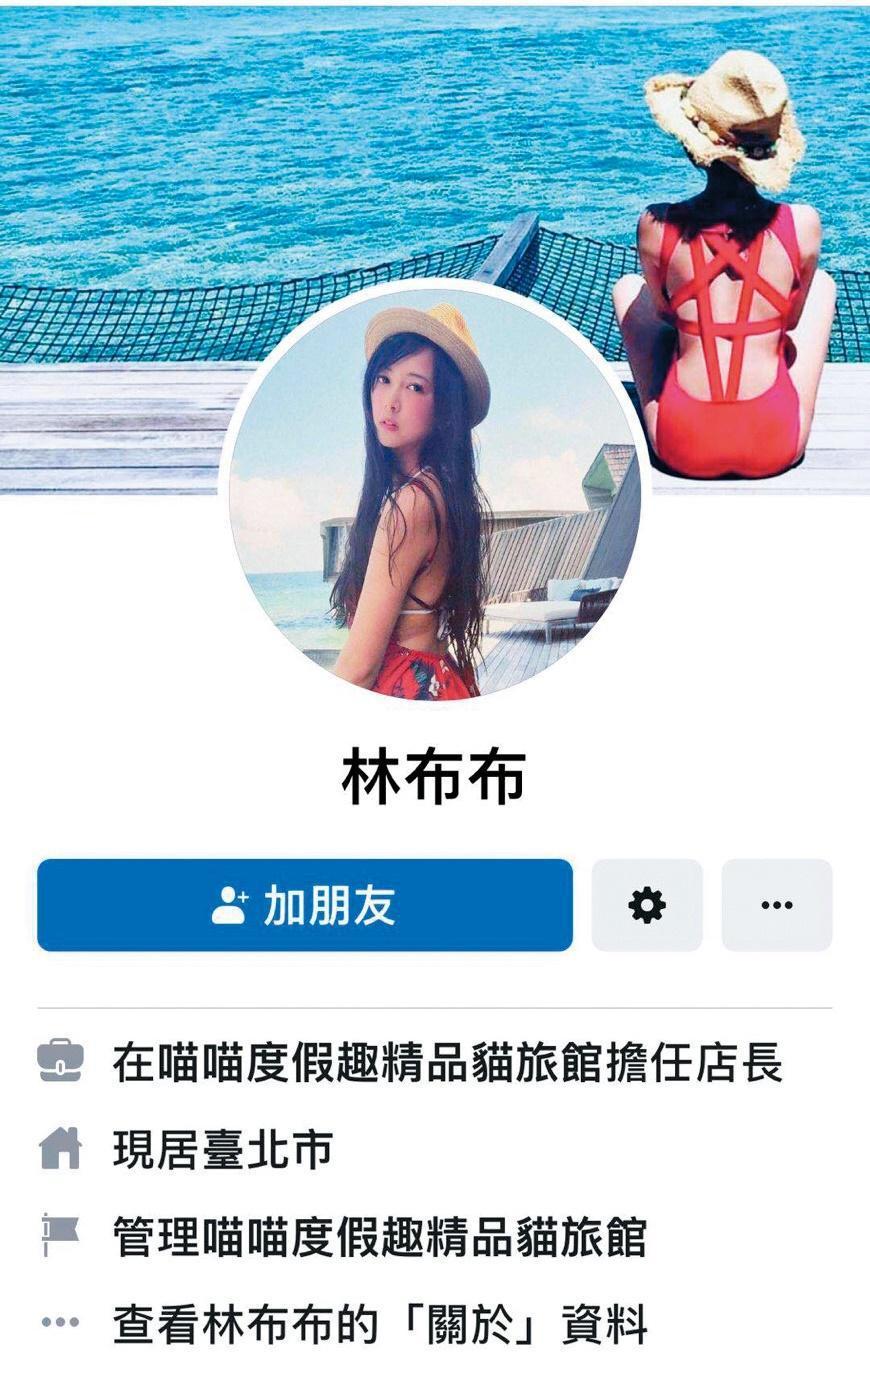 Mini與林宇輝拍拖後，創立新臉書帳號「林布布」記錄跟男友的私生活。（讀者提供）